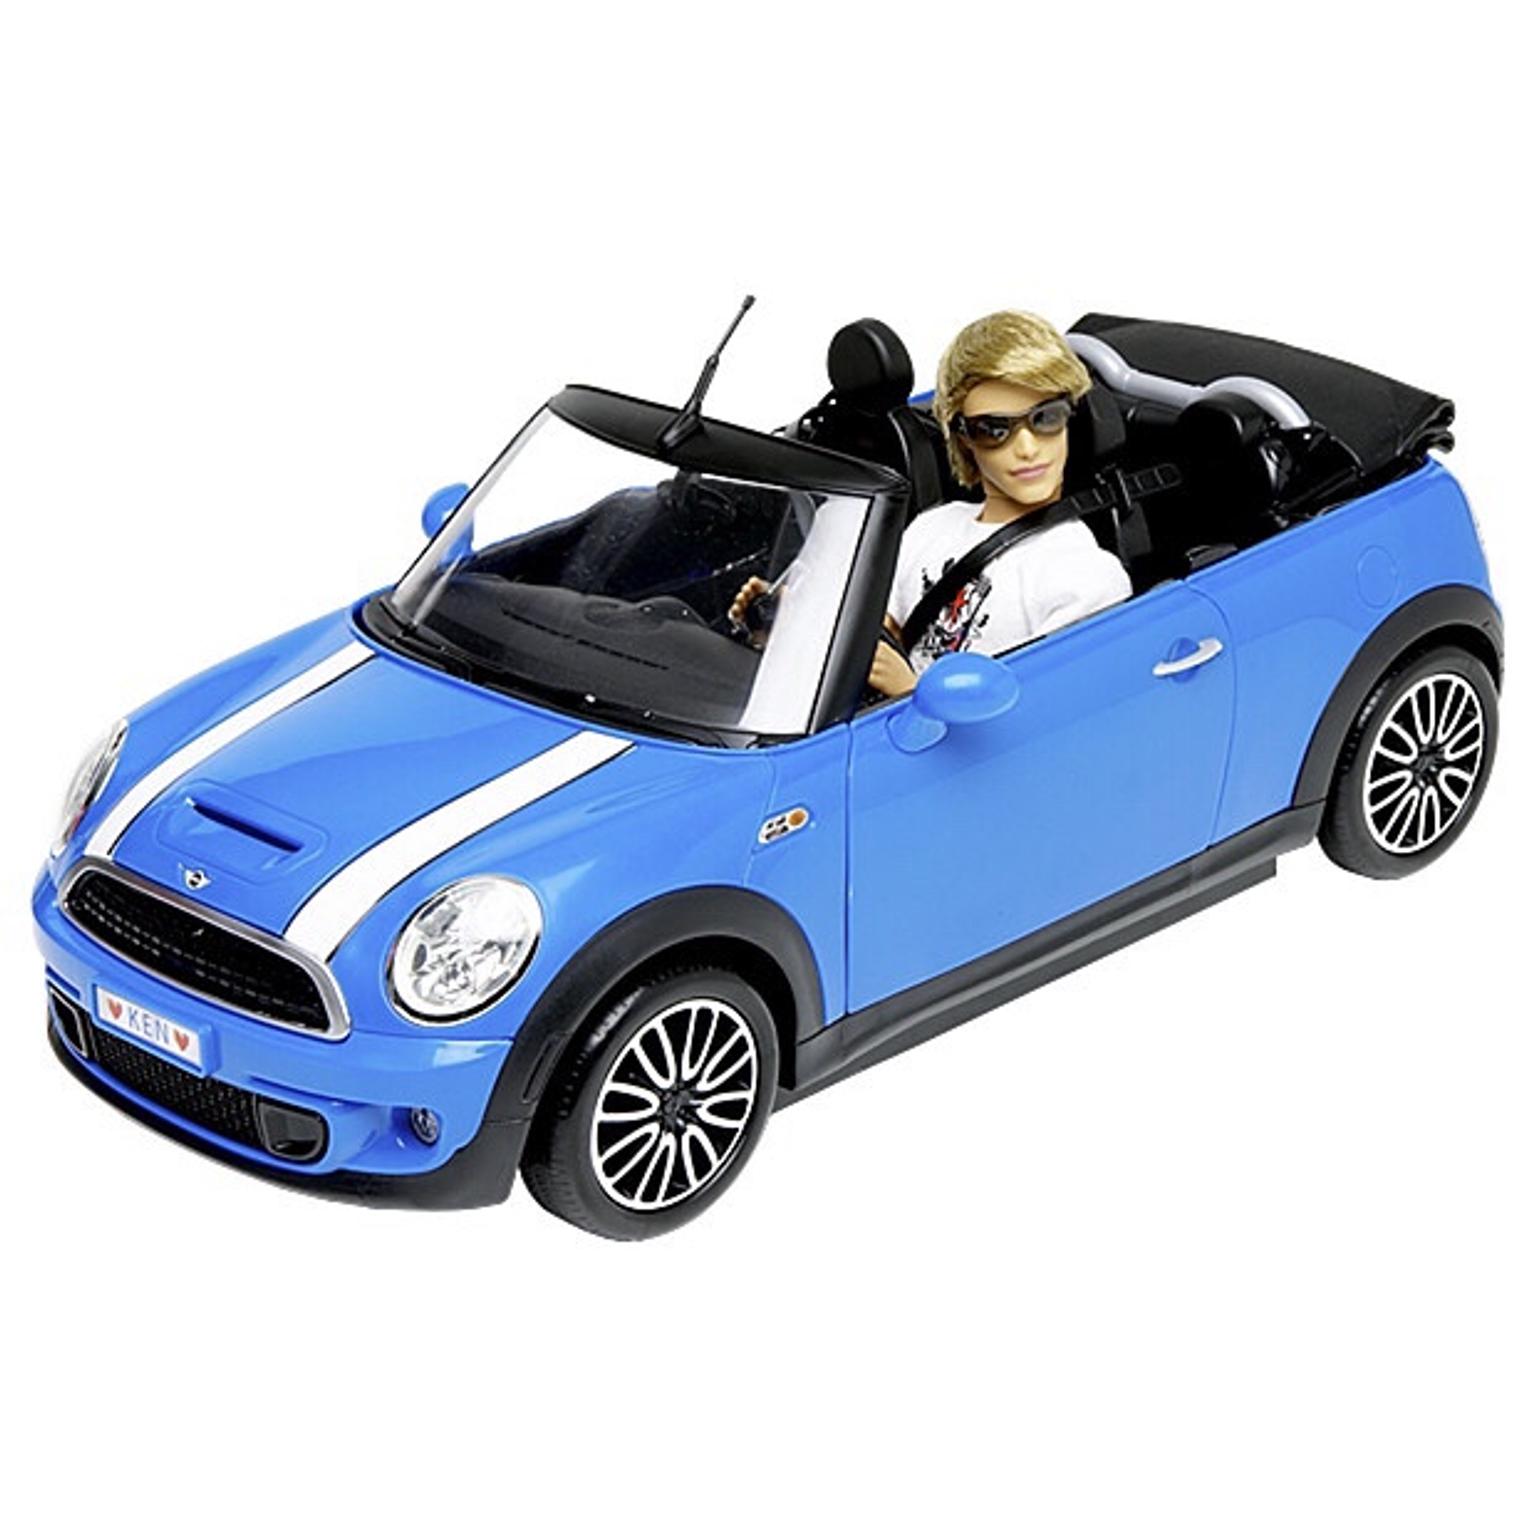 Barbie ken mini cooper in 20149 Milano for €35.00 for sale | Shpock